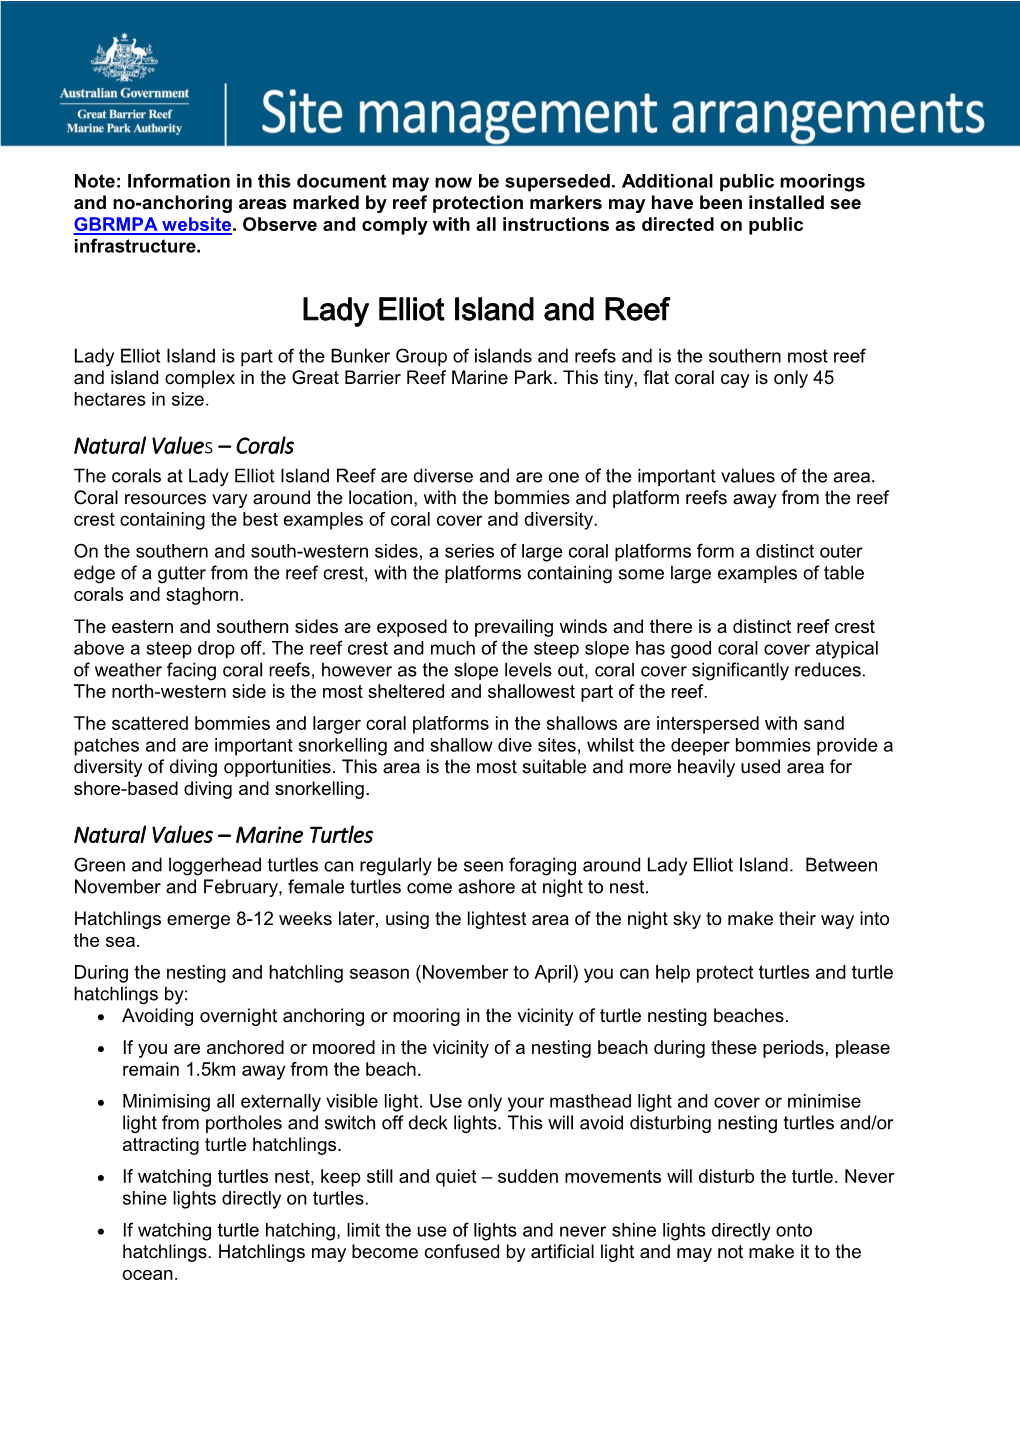 Lady Elliot Island and Reef